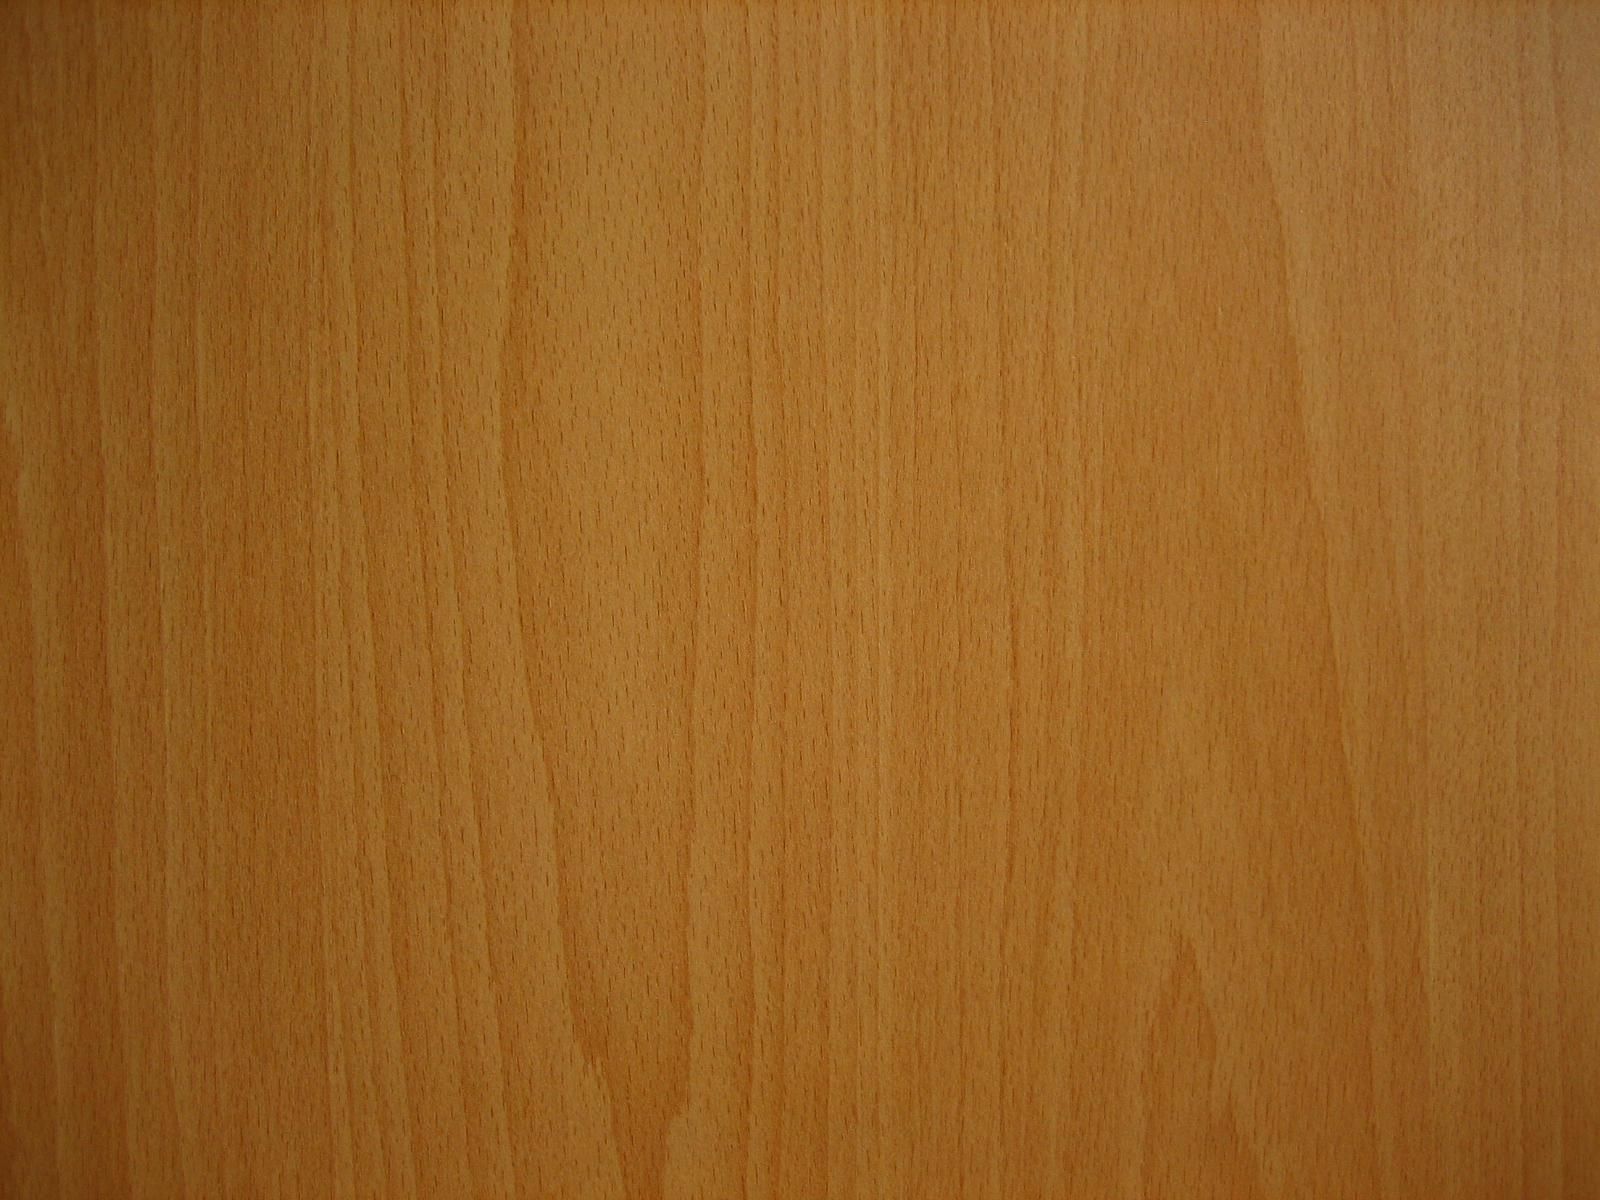 Wood surface photo